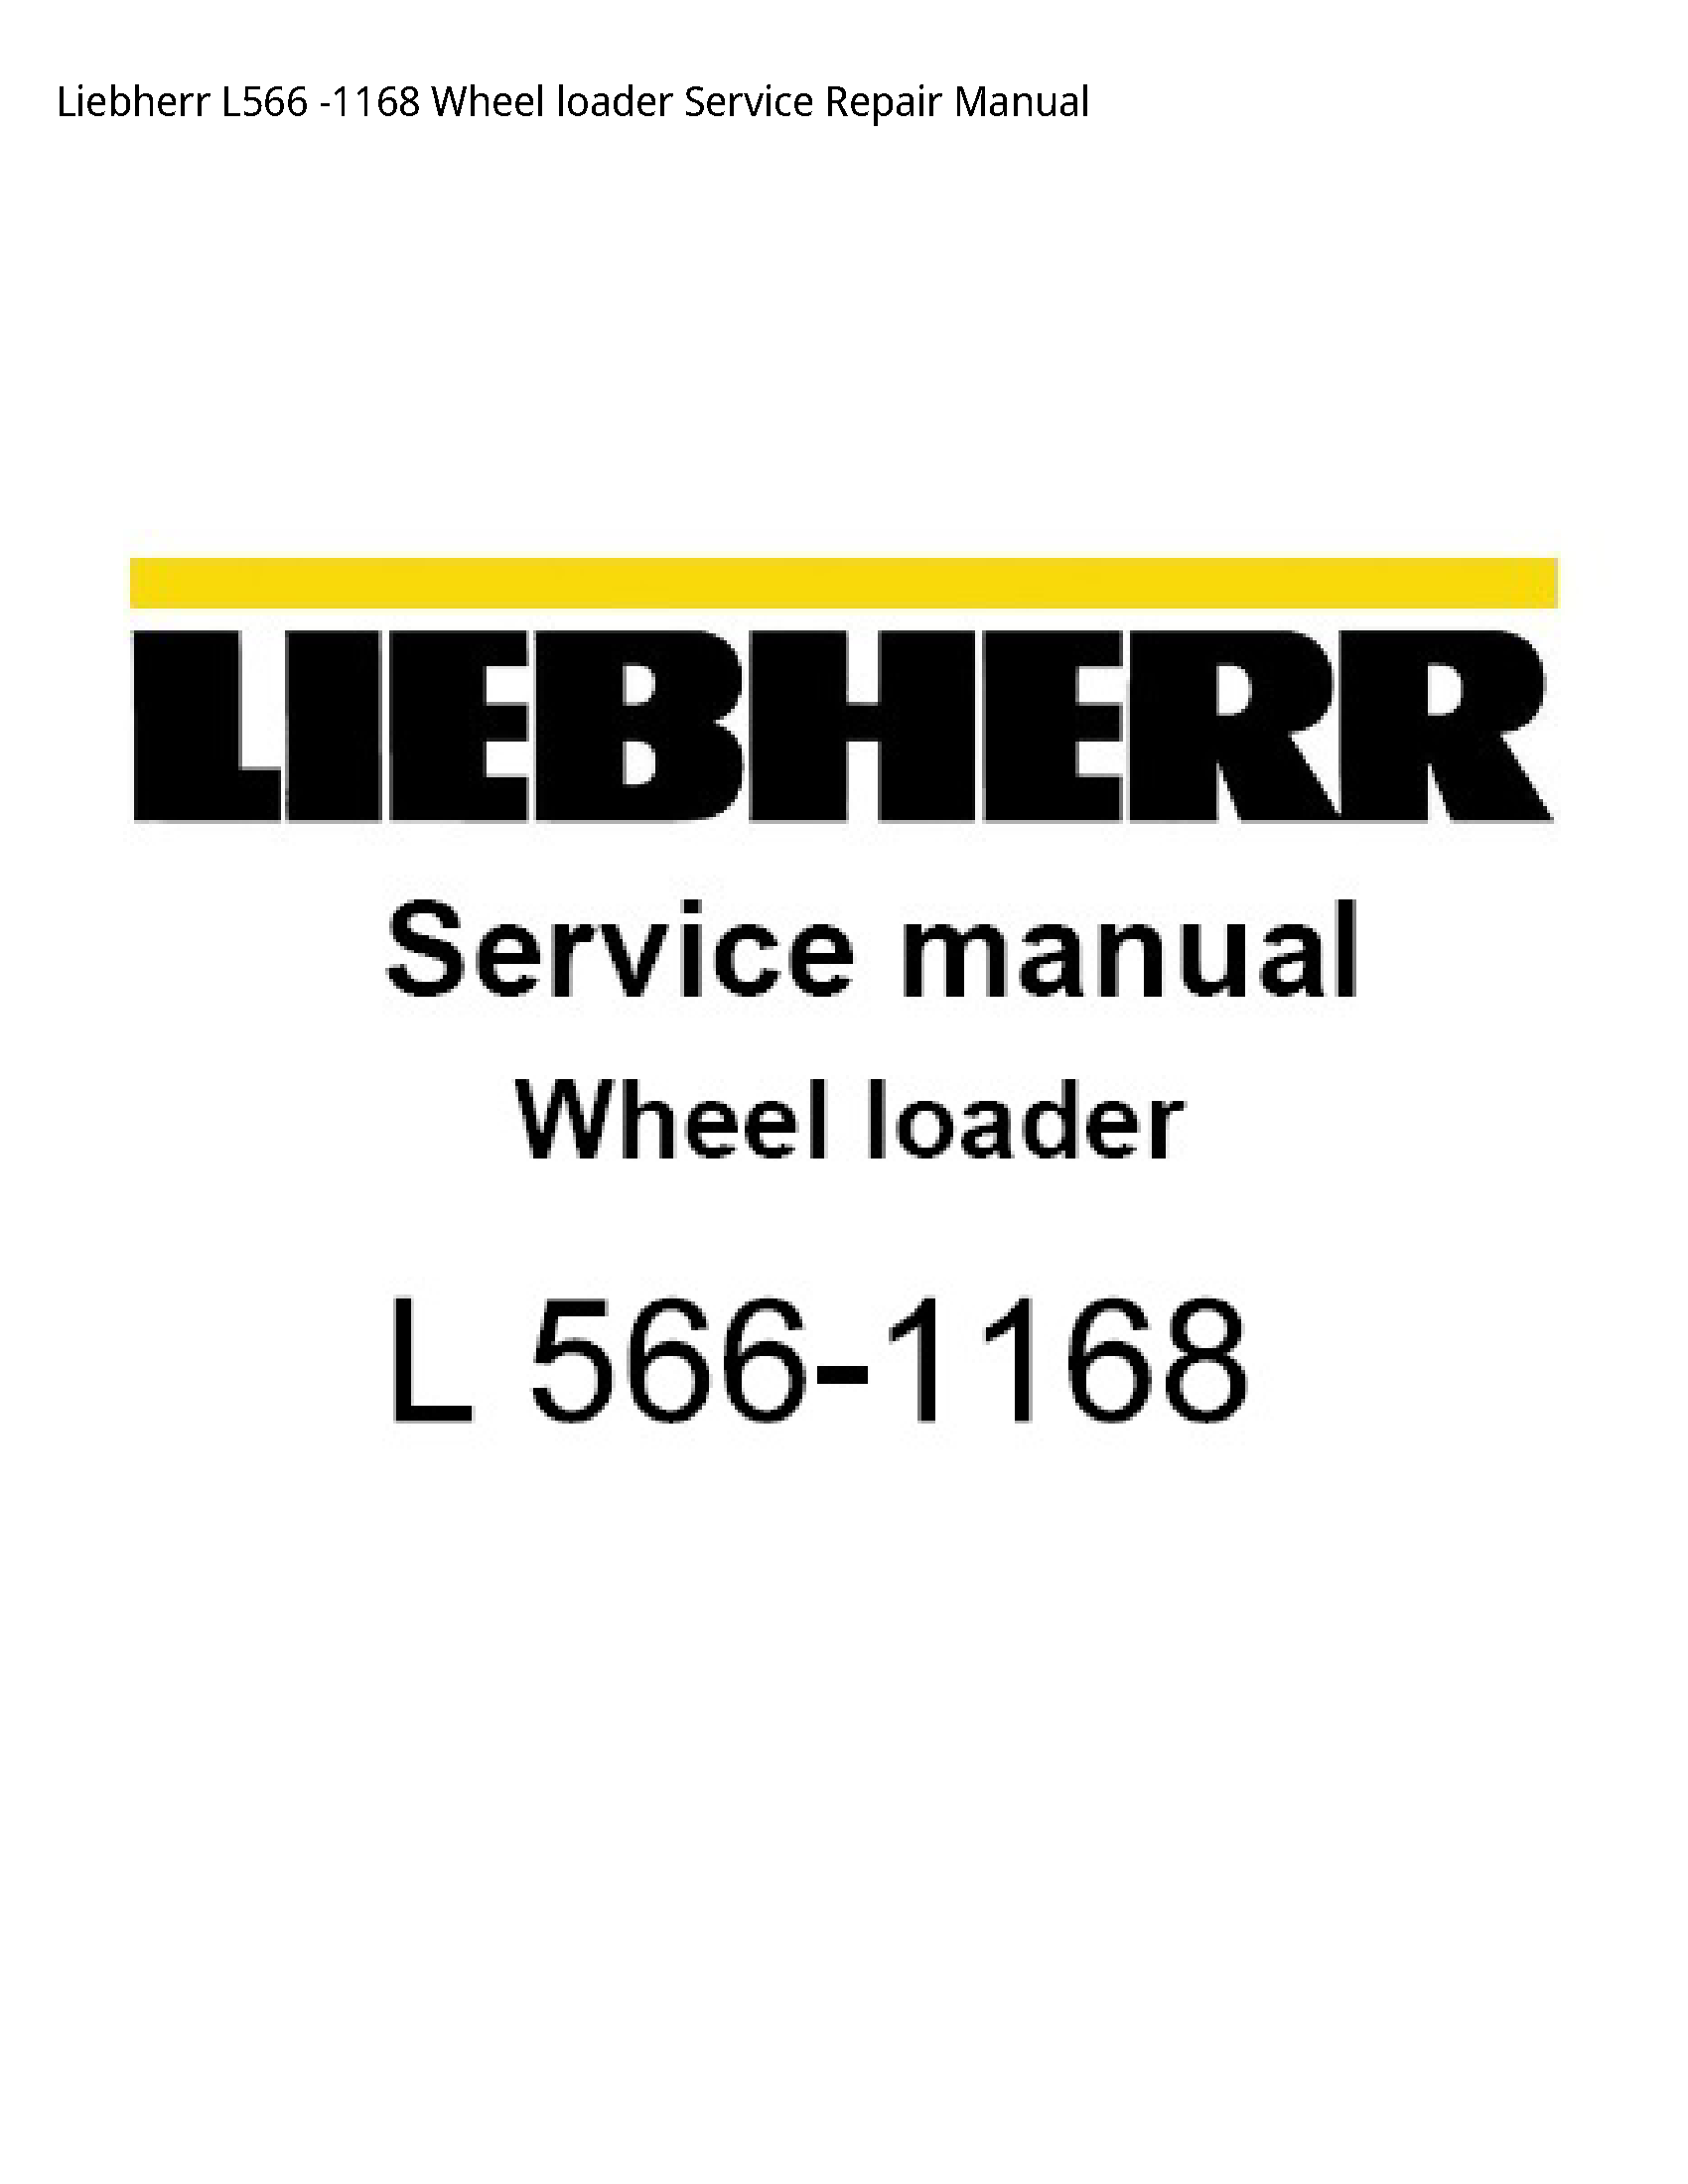 Liebherr L566 Wheel loader manual